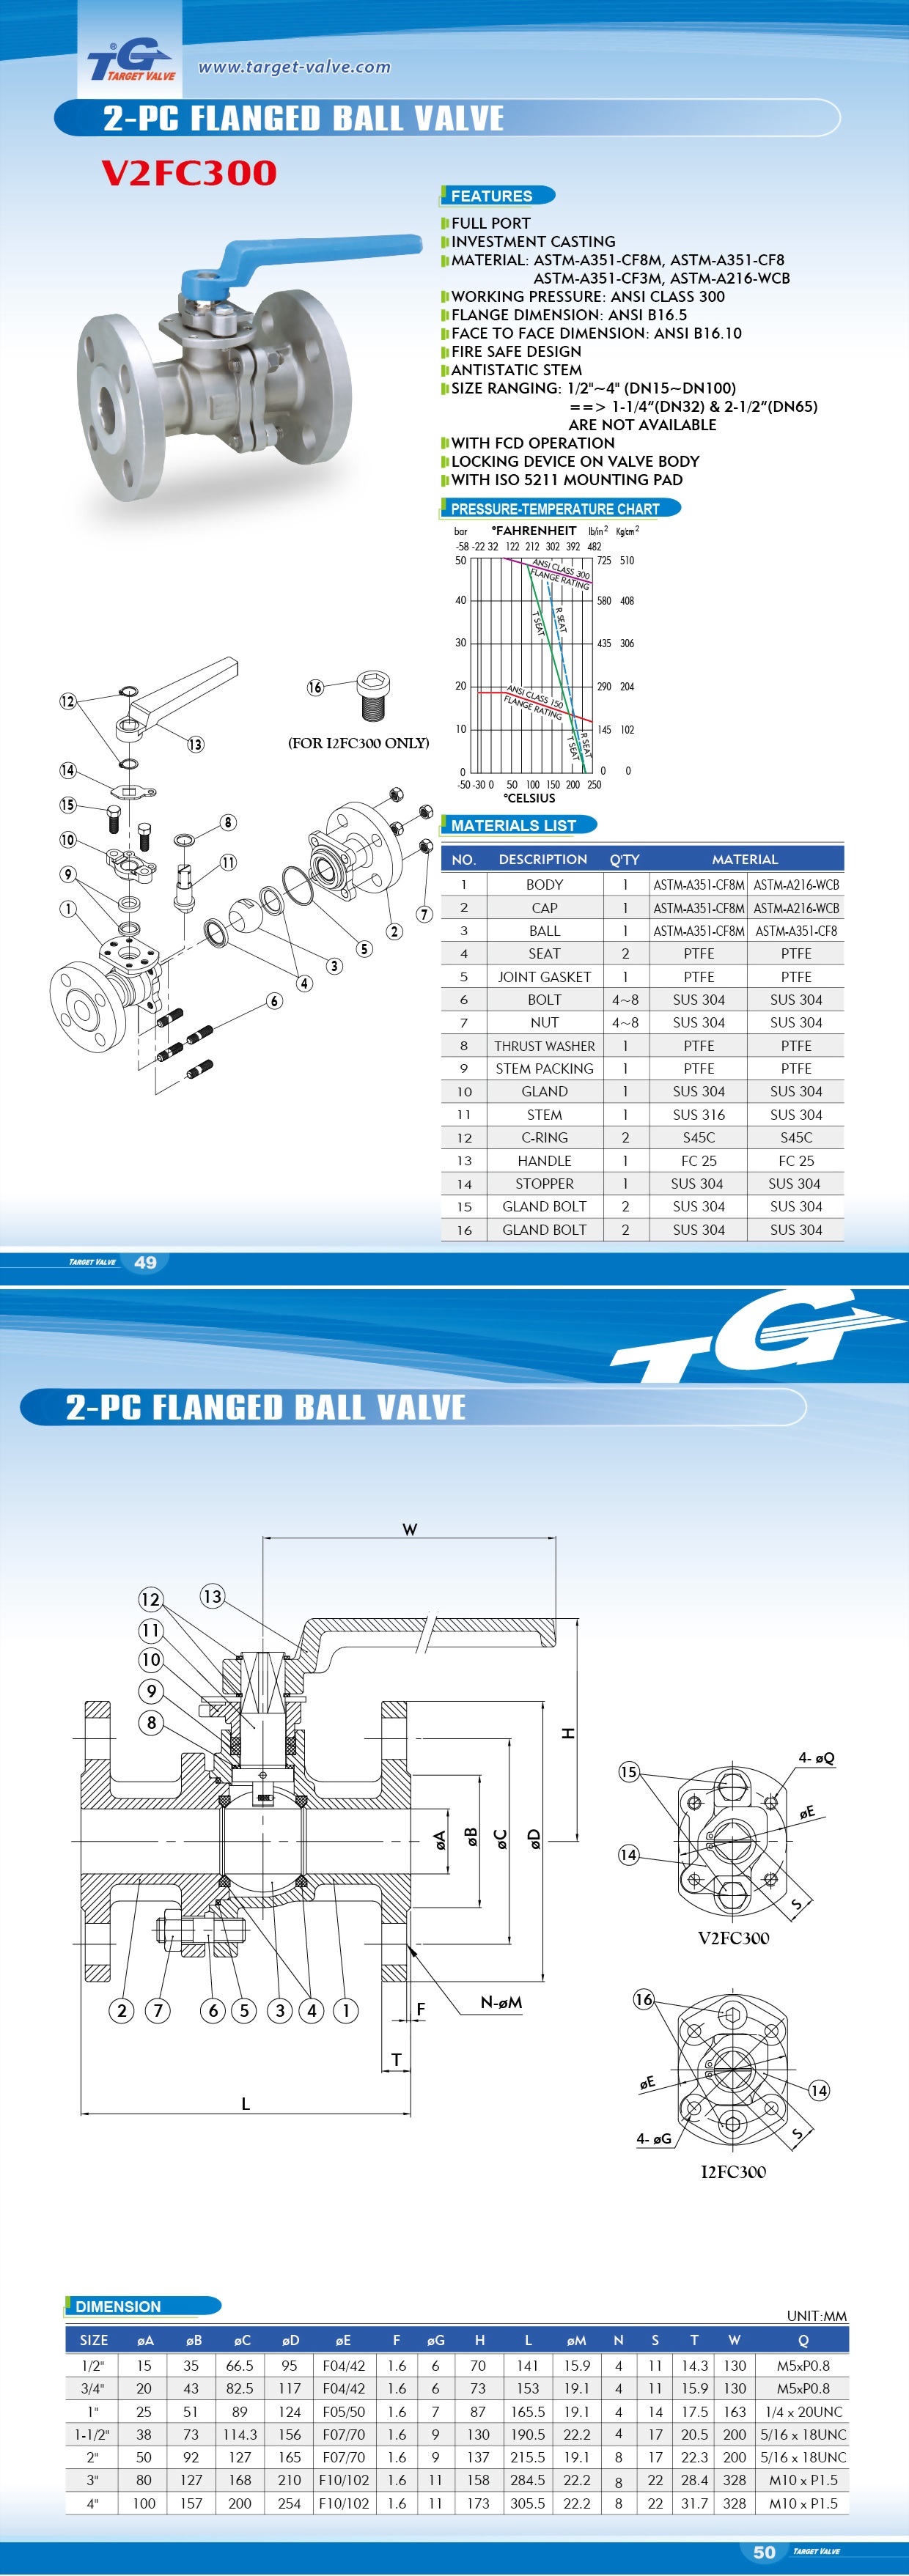 2 PC FLANGED BALL VALVE - V2FC300